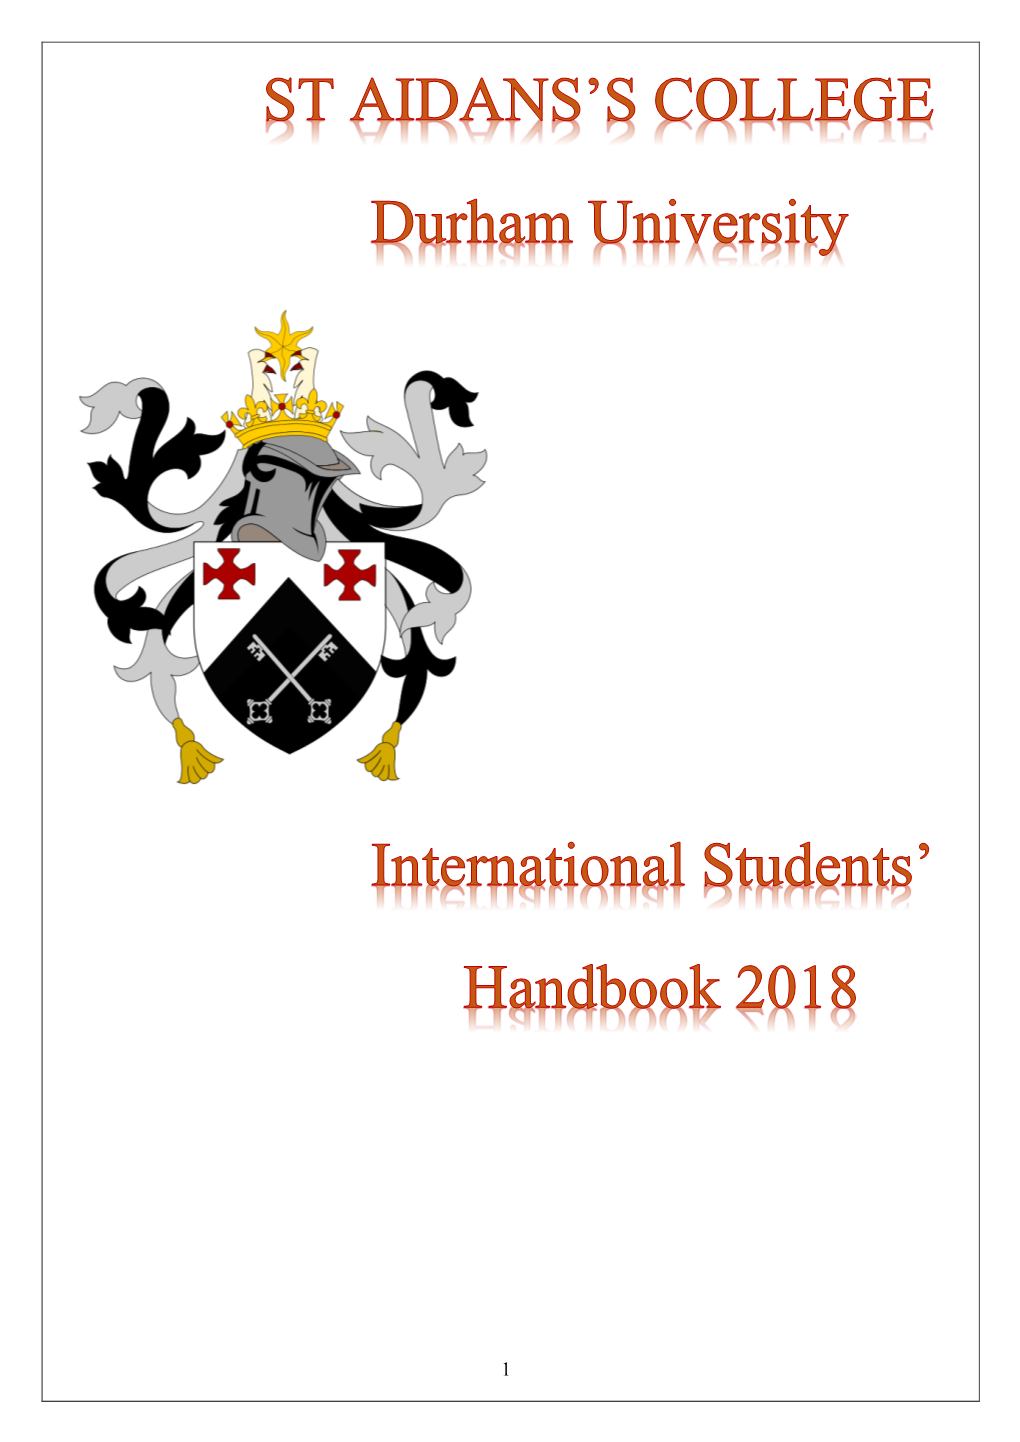 Durham University in the Uk Sport